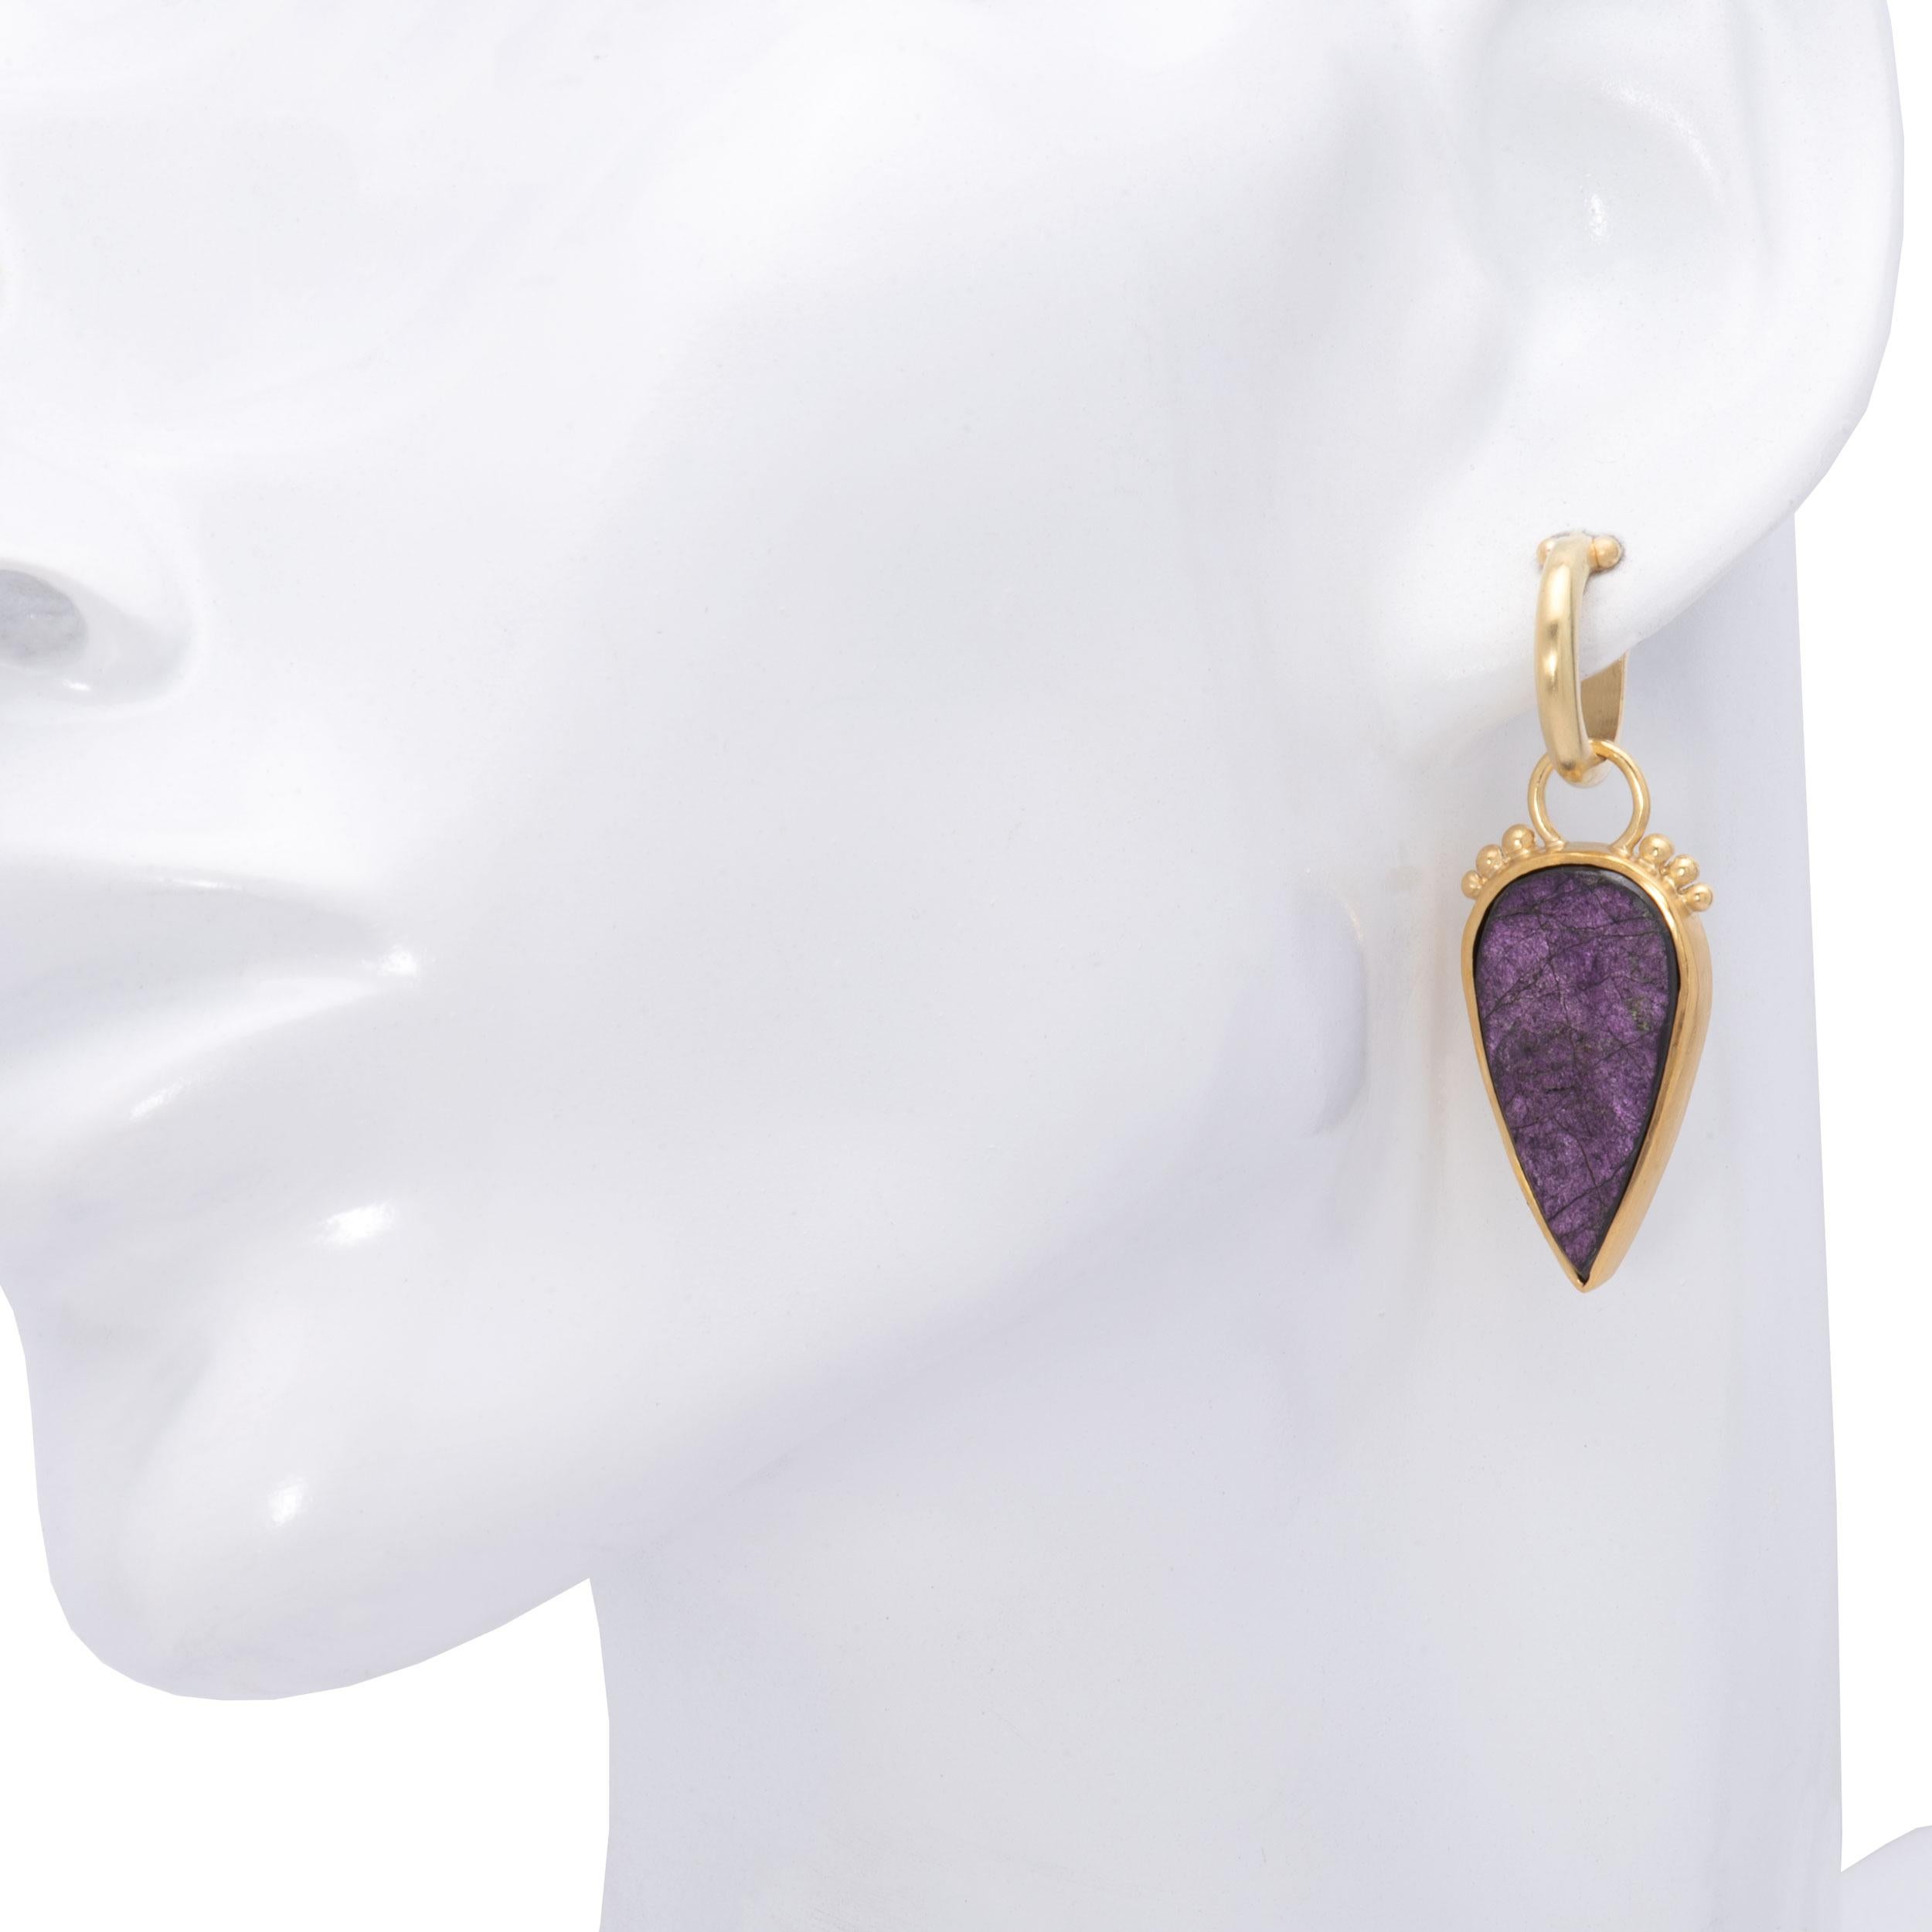 Iridescent Purpurite Teardrop Earrings in 22 Karat and 18 Karat Gold In New Condition For Sale In Santa Fe, NM